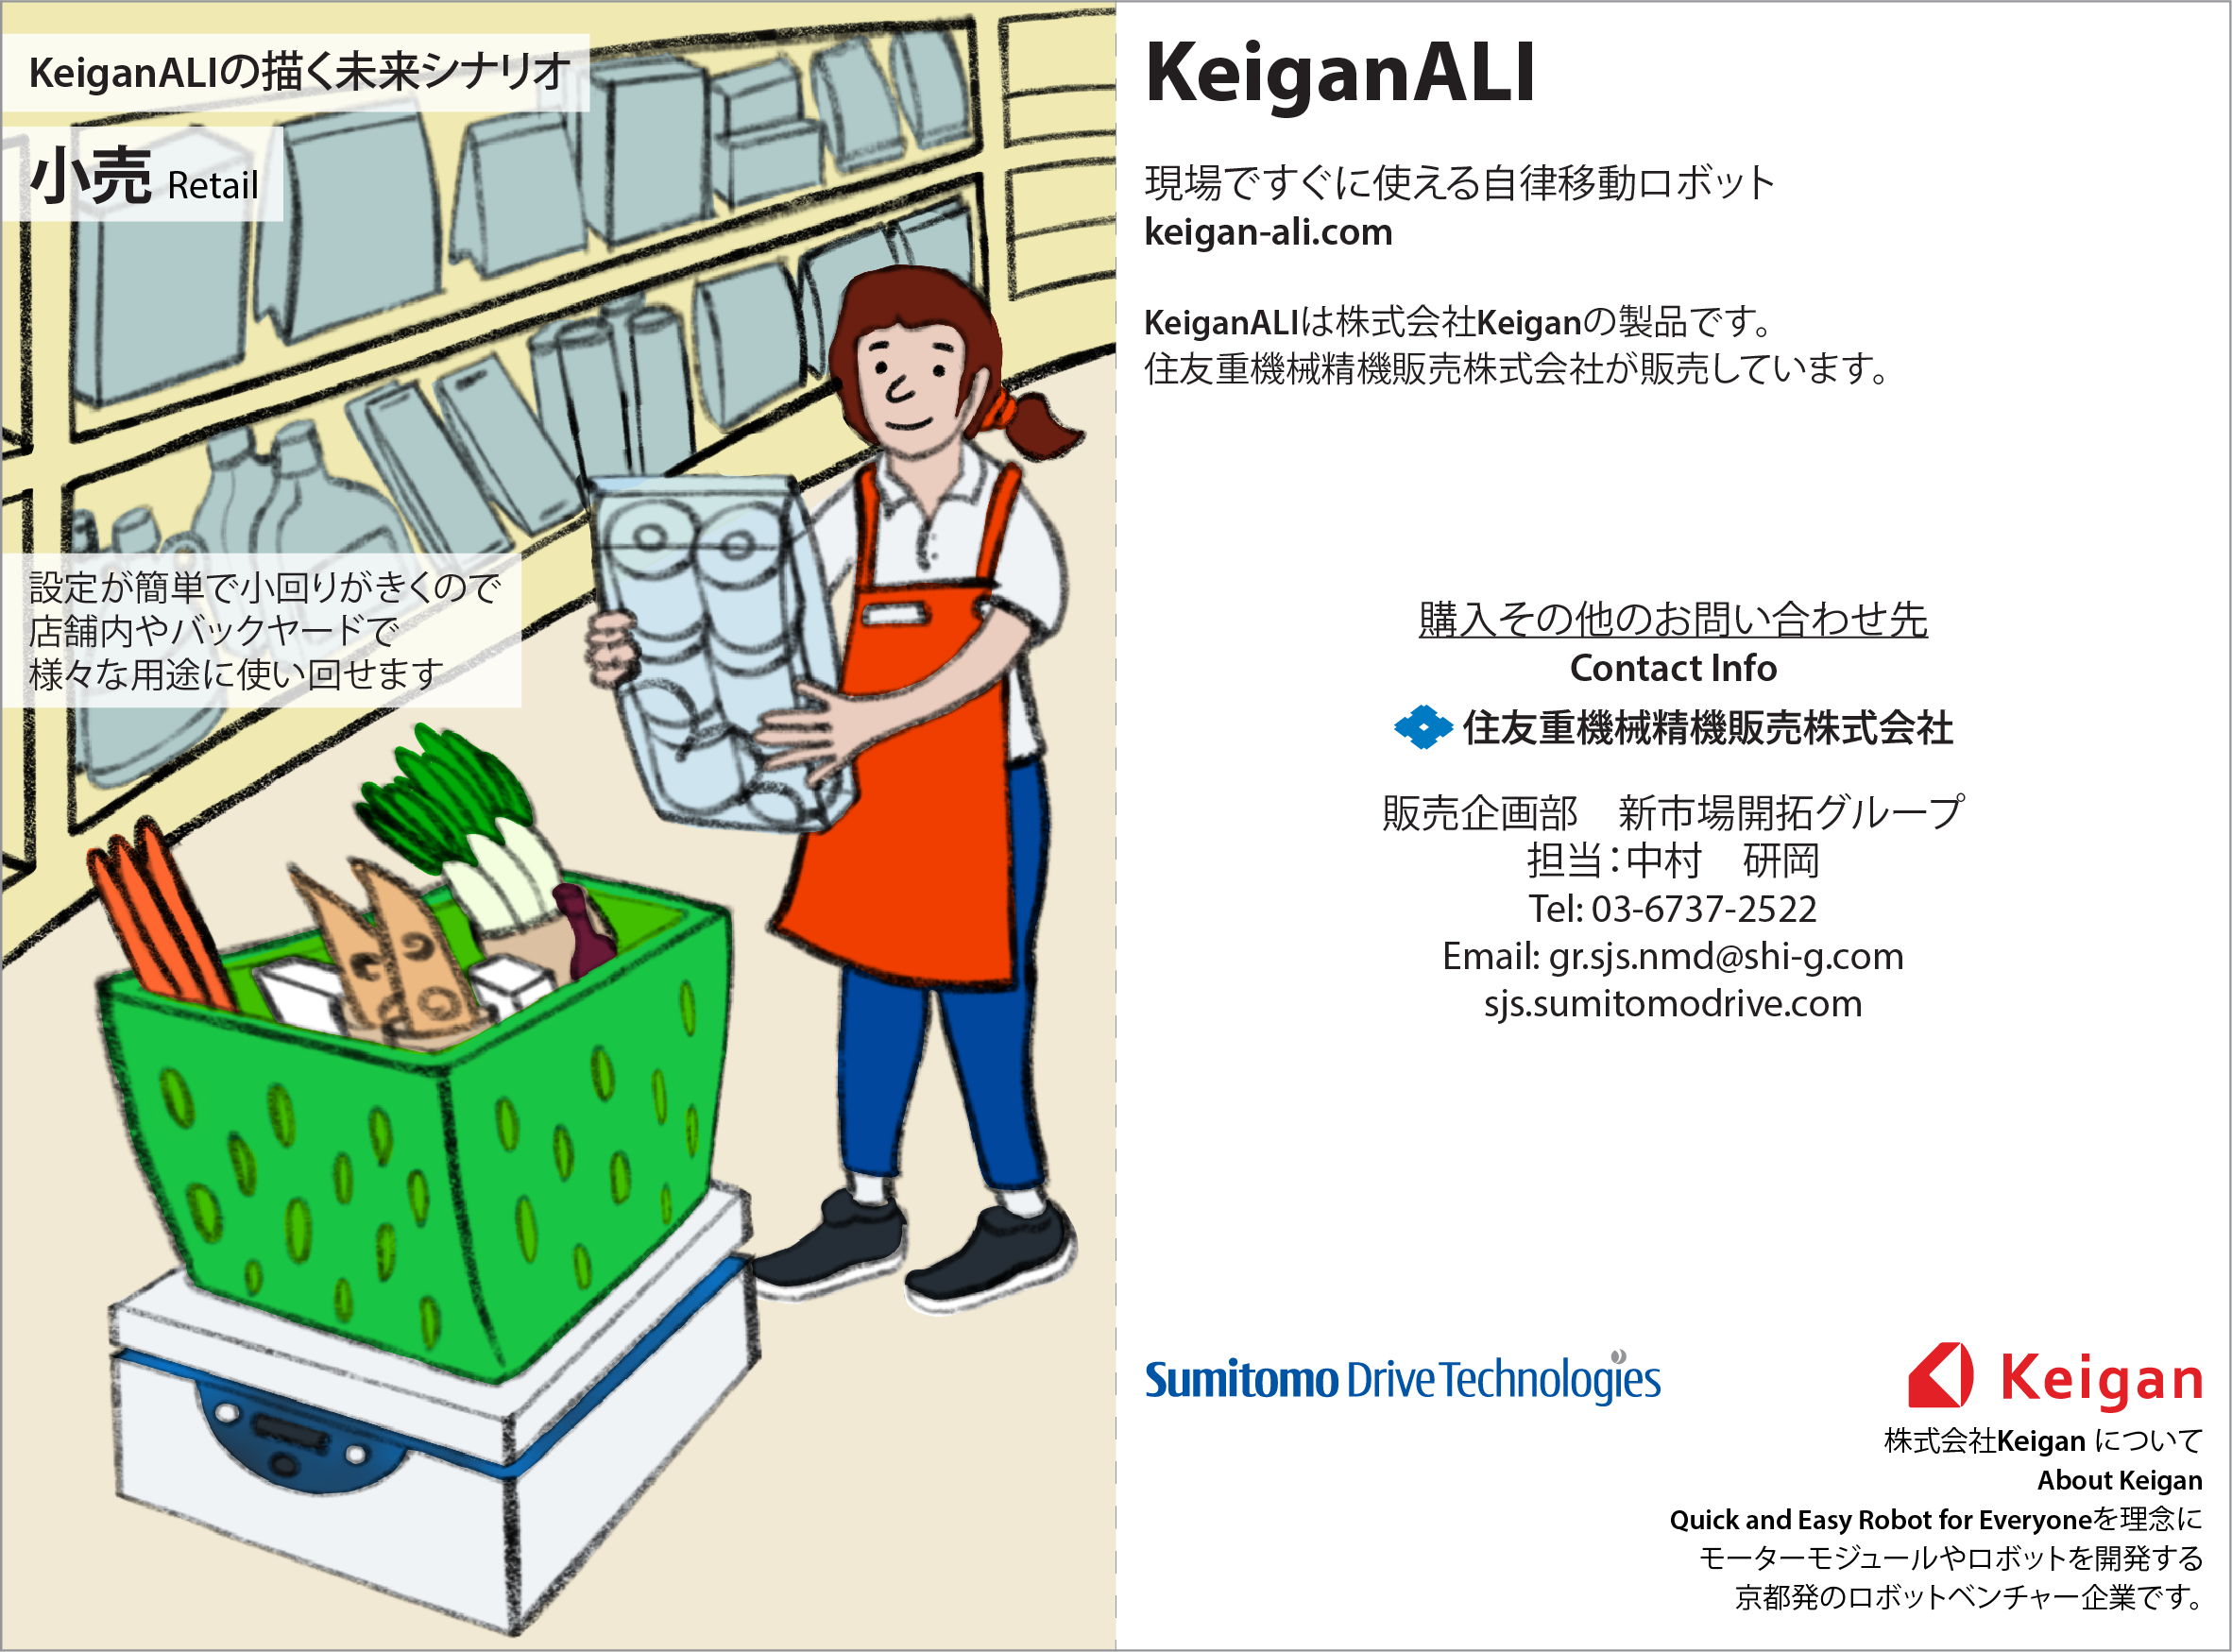 Keigan_Ali_Postcards-Retail.png